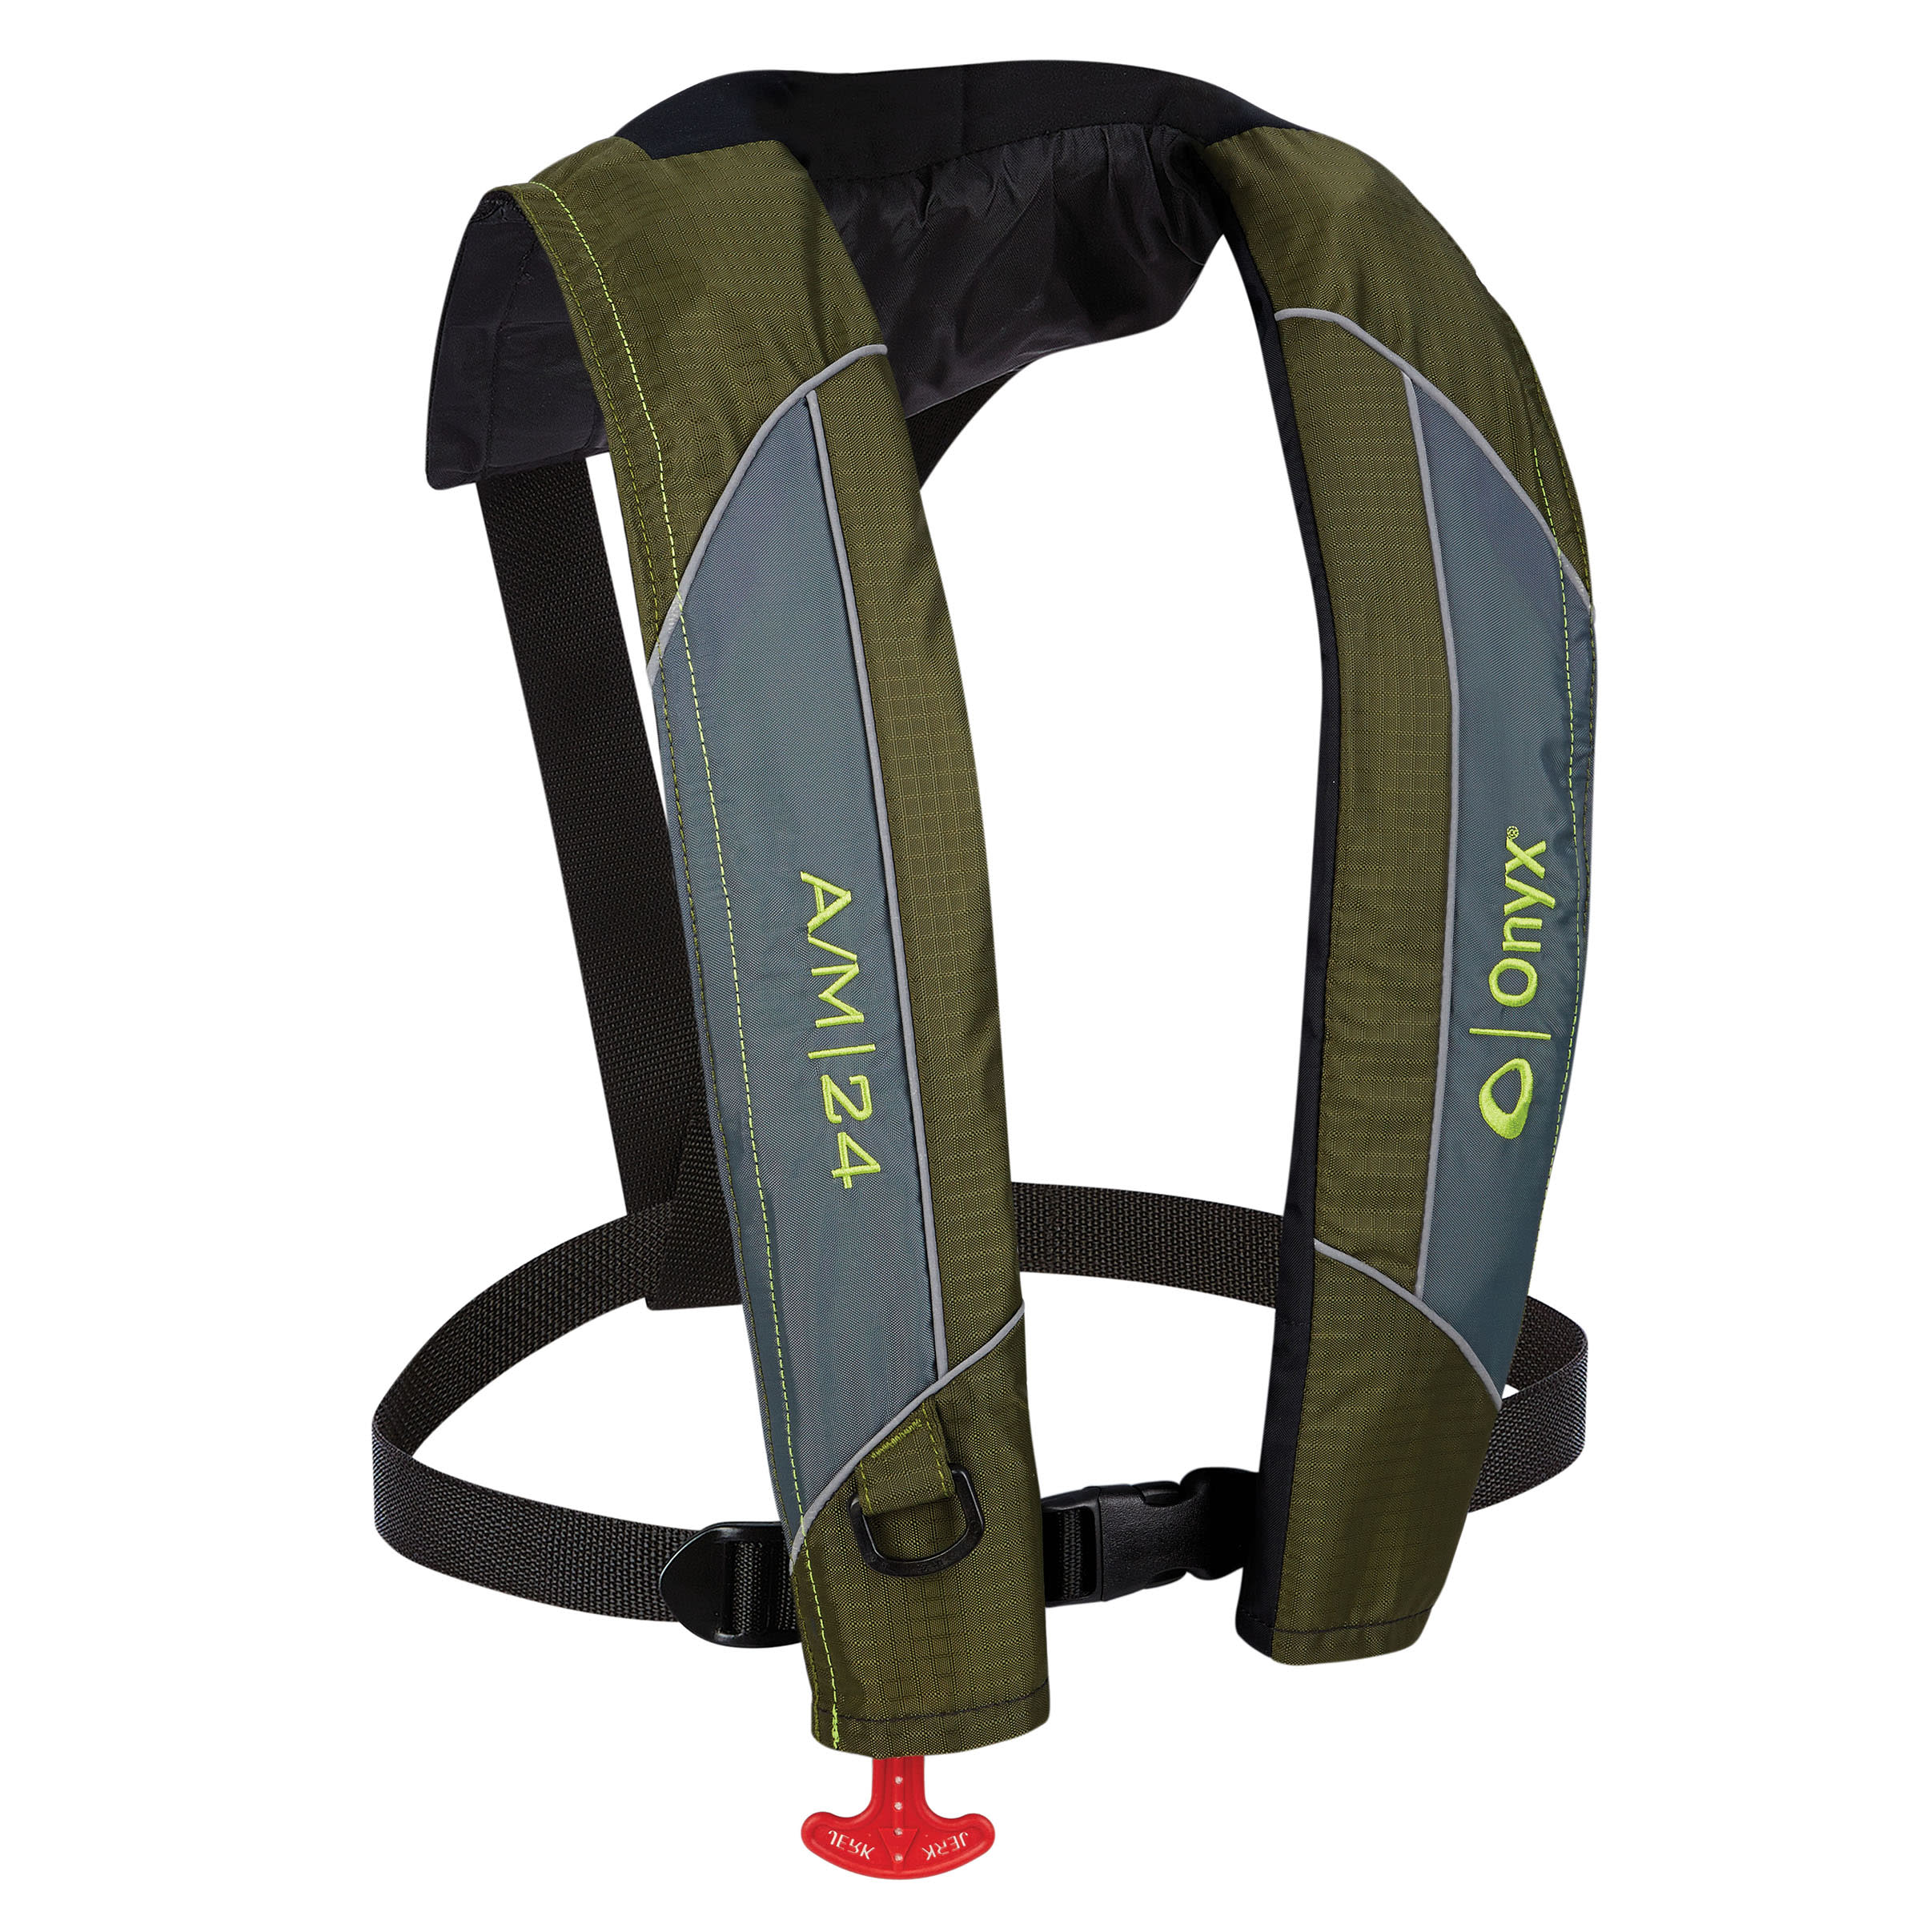 Onyx® A/M-24 Inflatable Life Jacket - Green